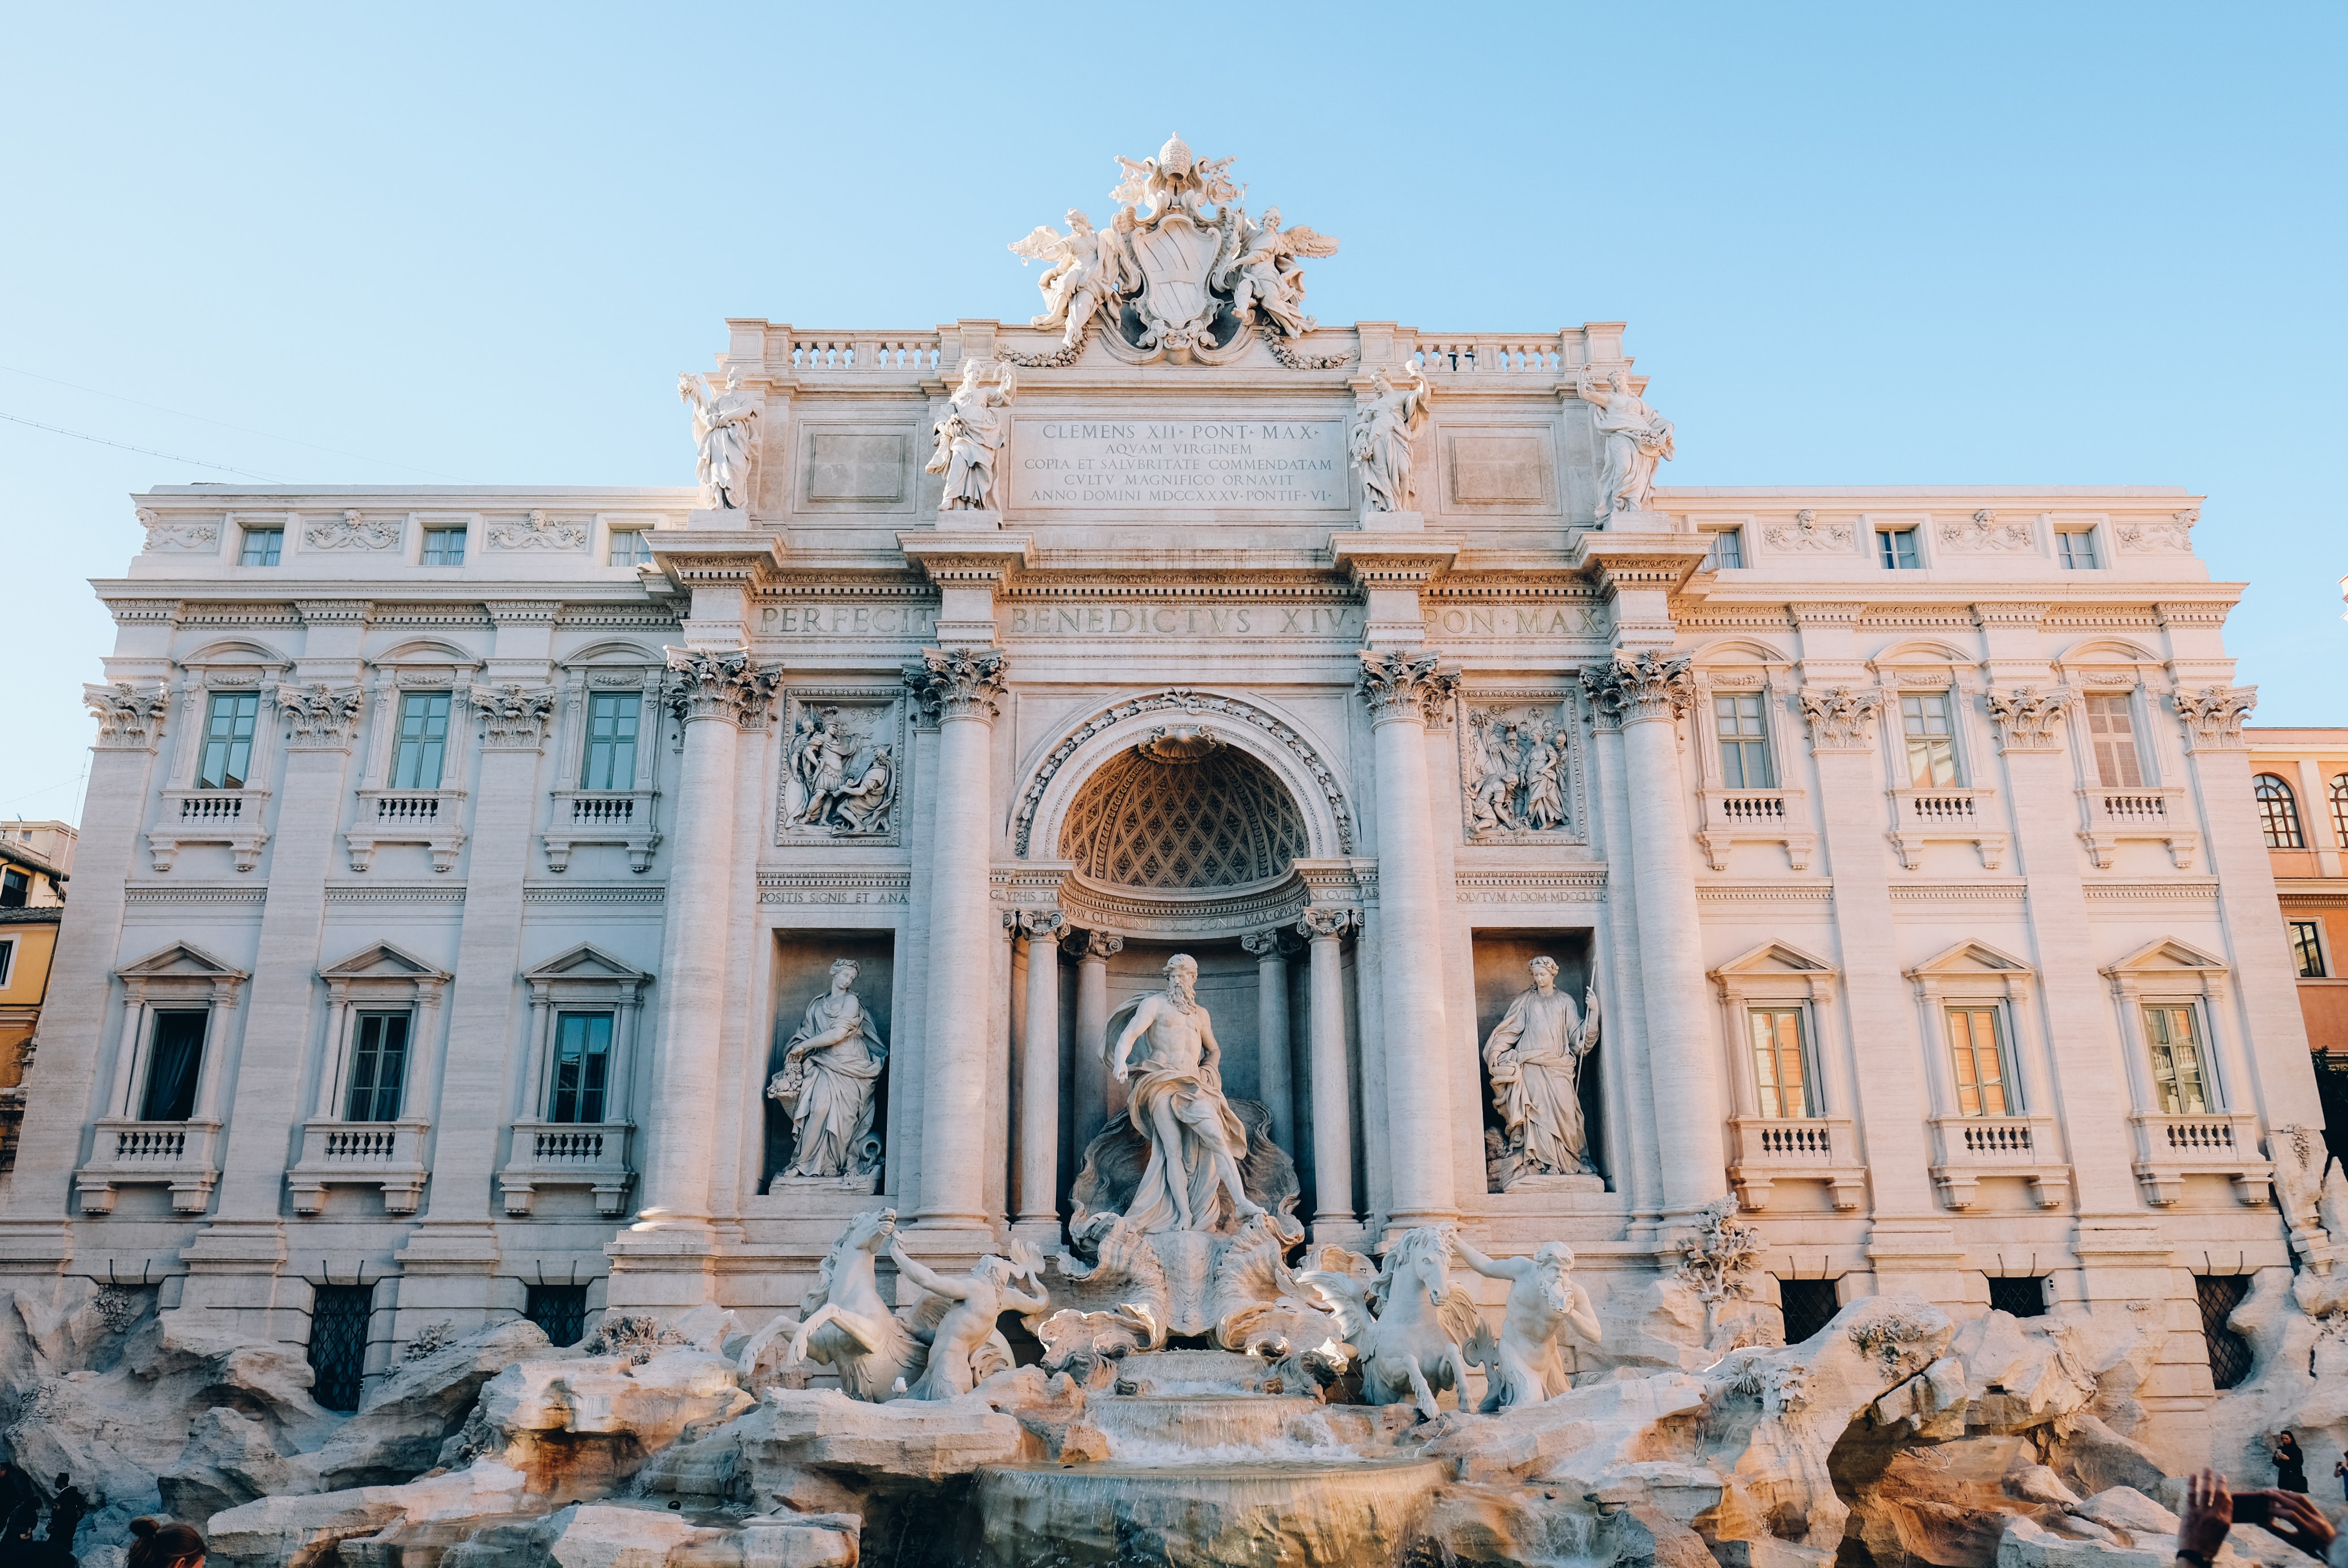 Trevi fountain in Rome Italy photo by Fabio Fistarol